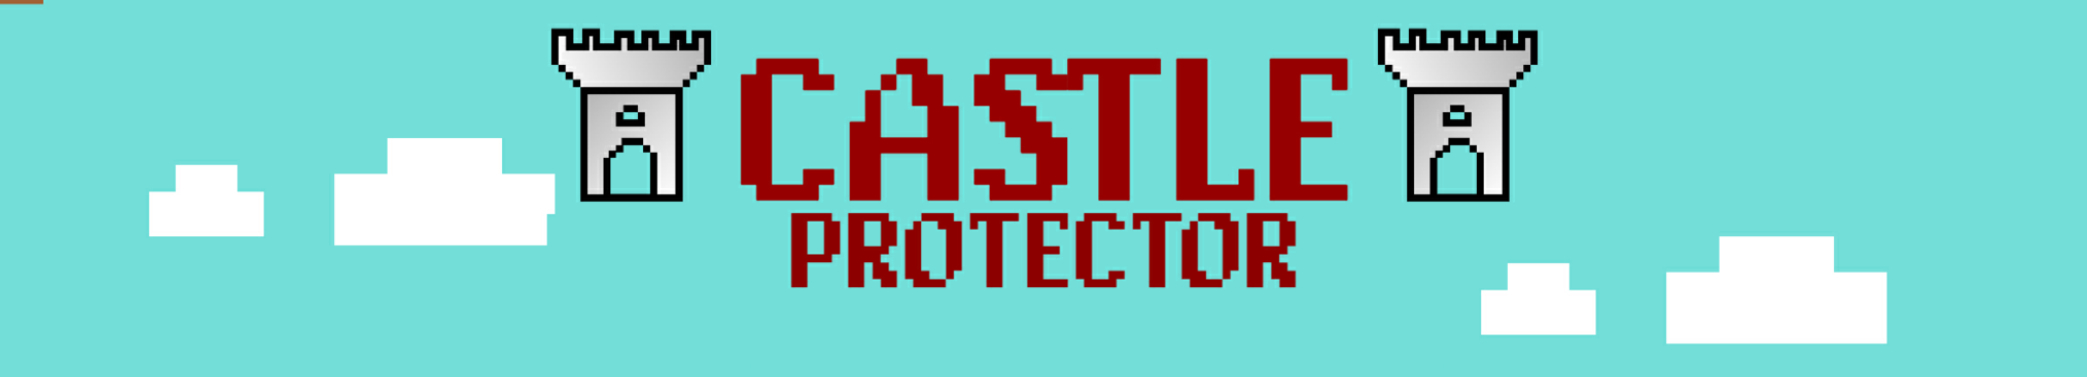 Castle Protector